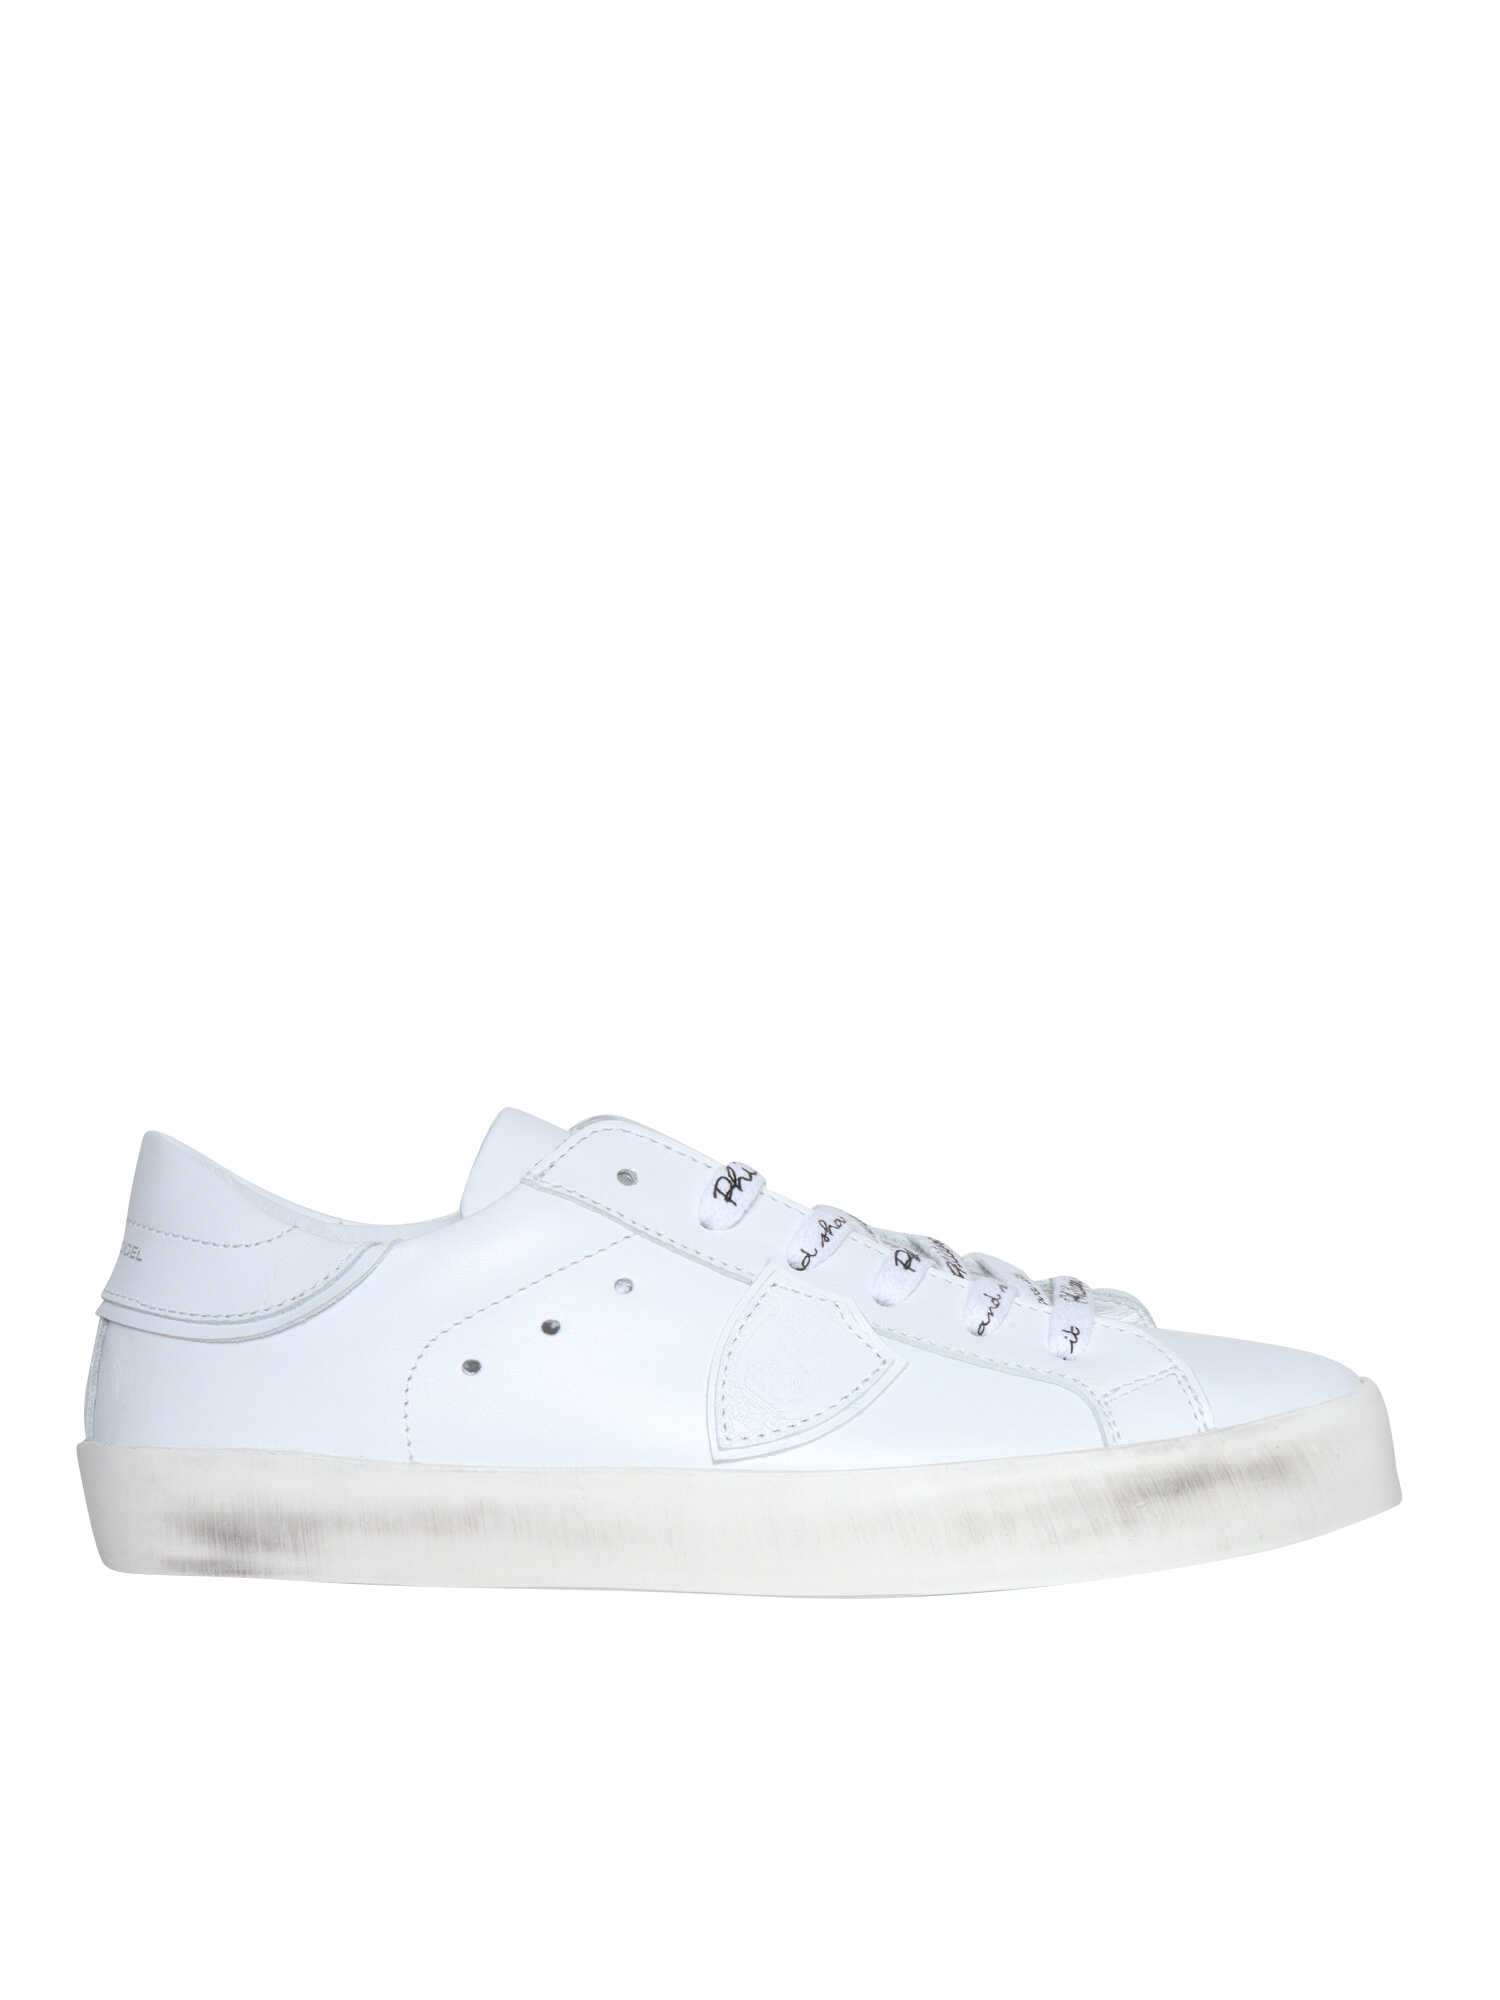 Poze Philippe Model Prsx sneakers White